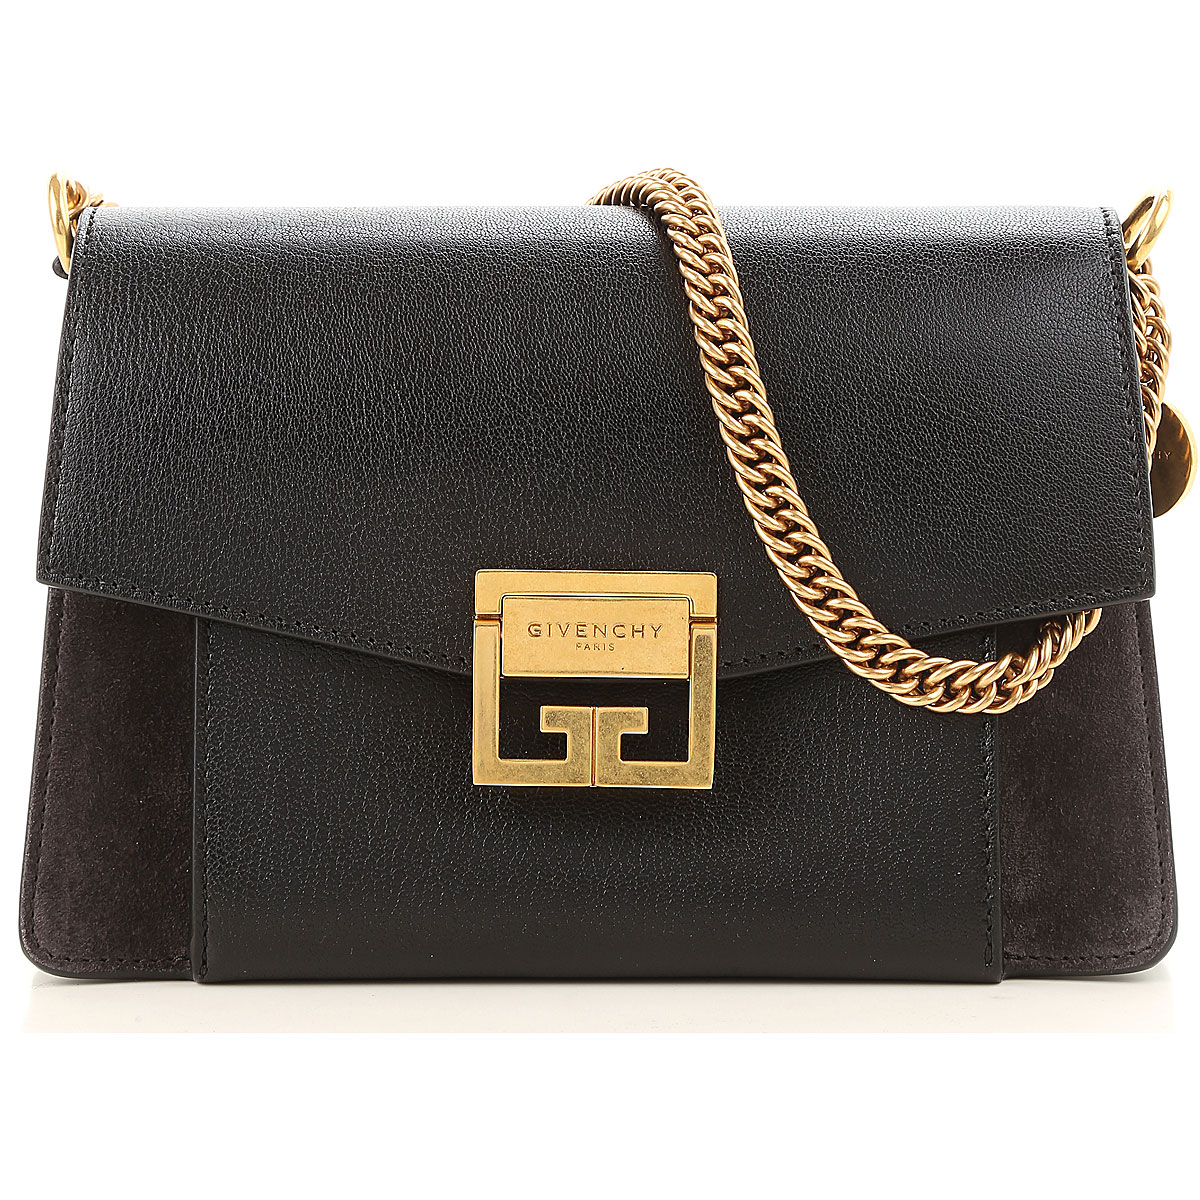 Handbags Givenchy, Style code bb501cb033002